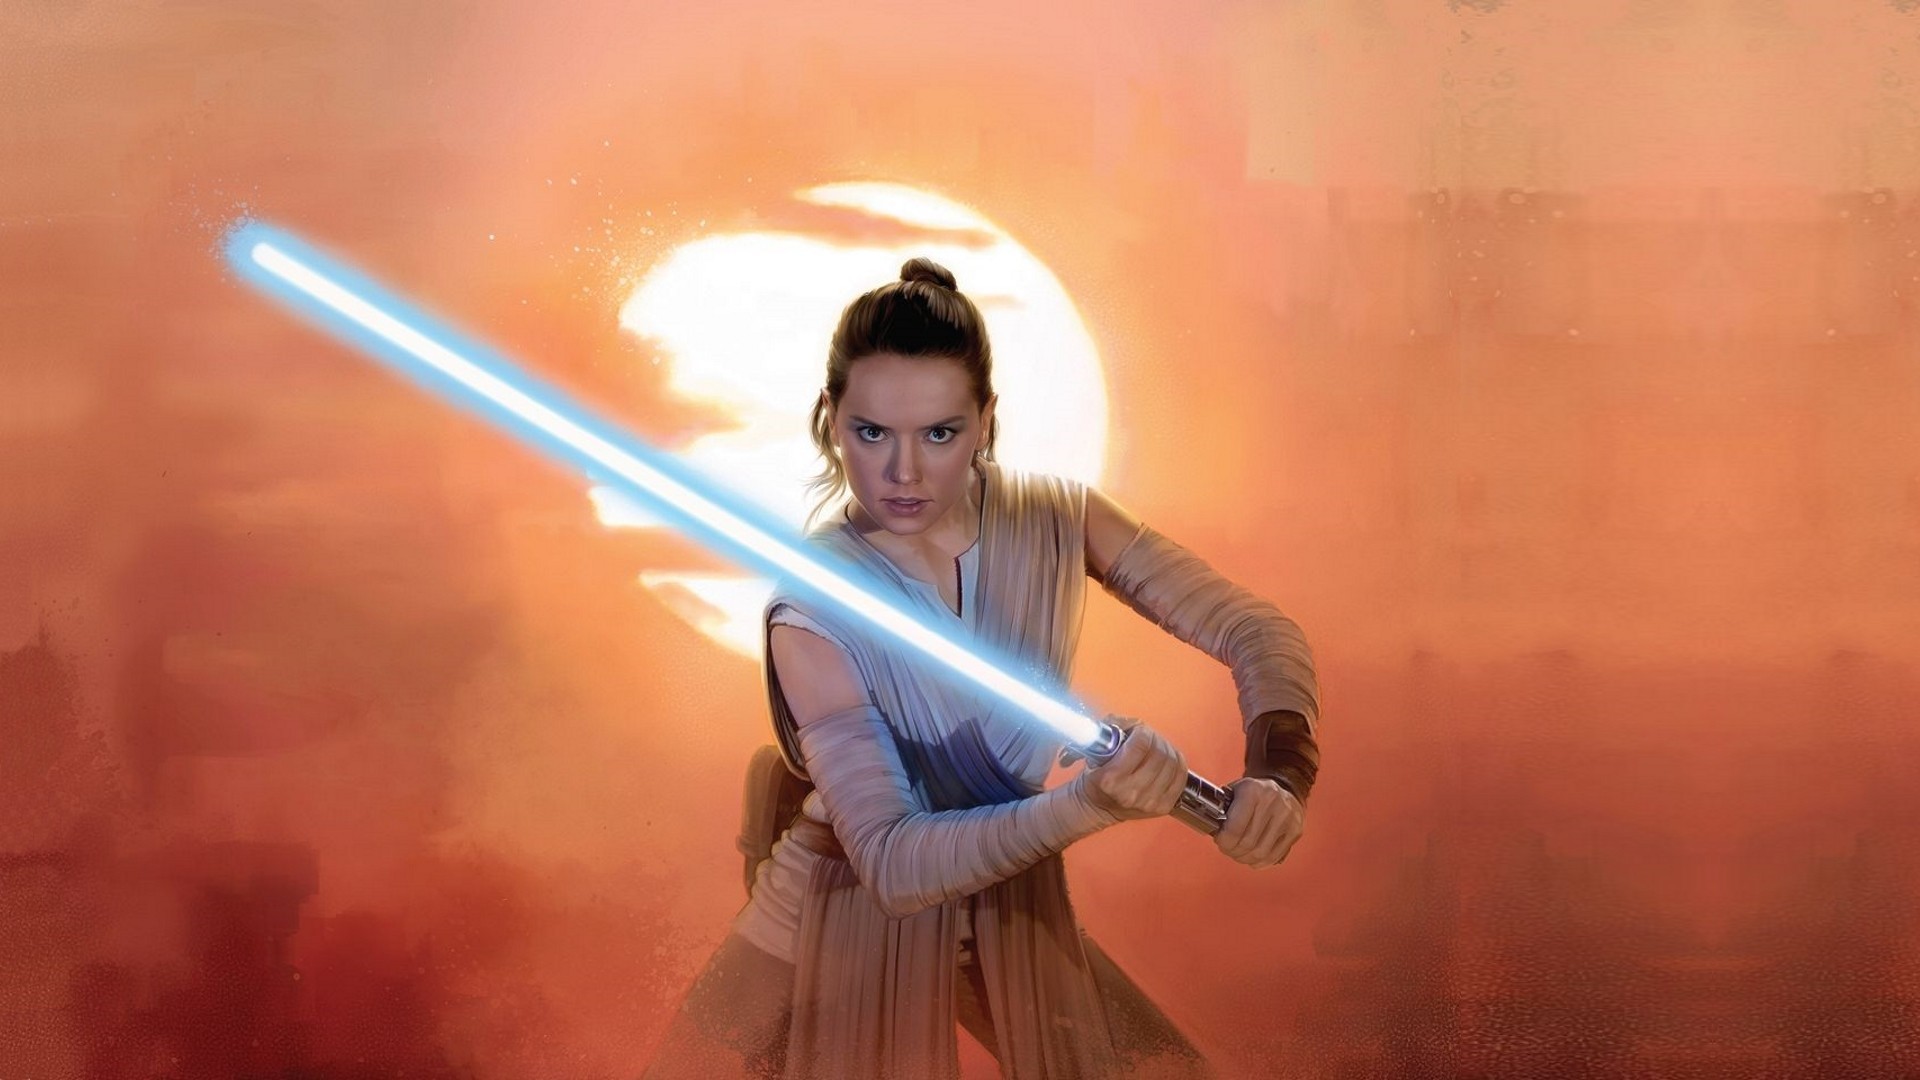 People Star Wars lightsaber Jedi Daisy Ridley Rey (from Star Wars)